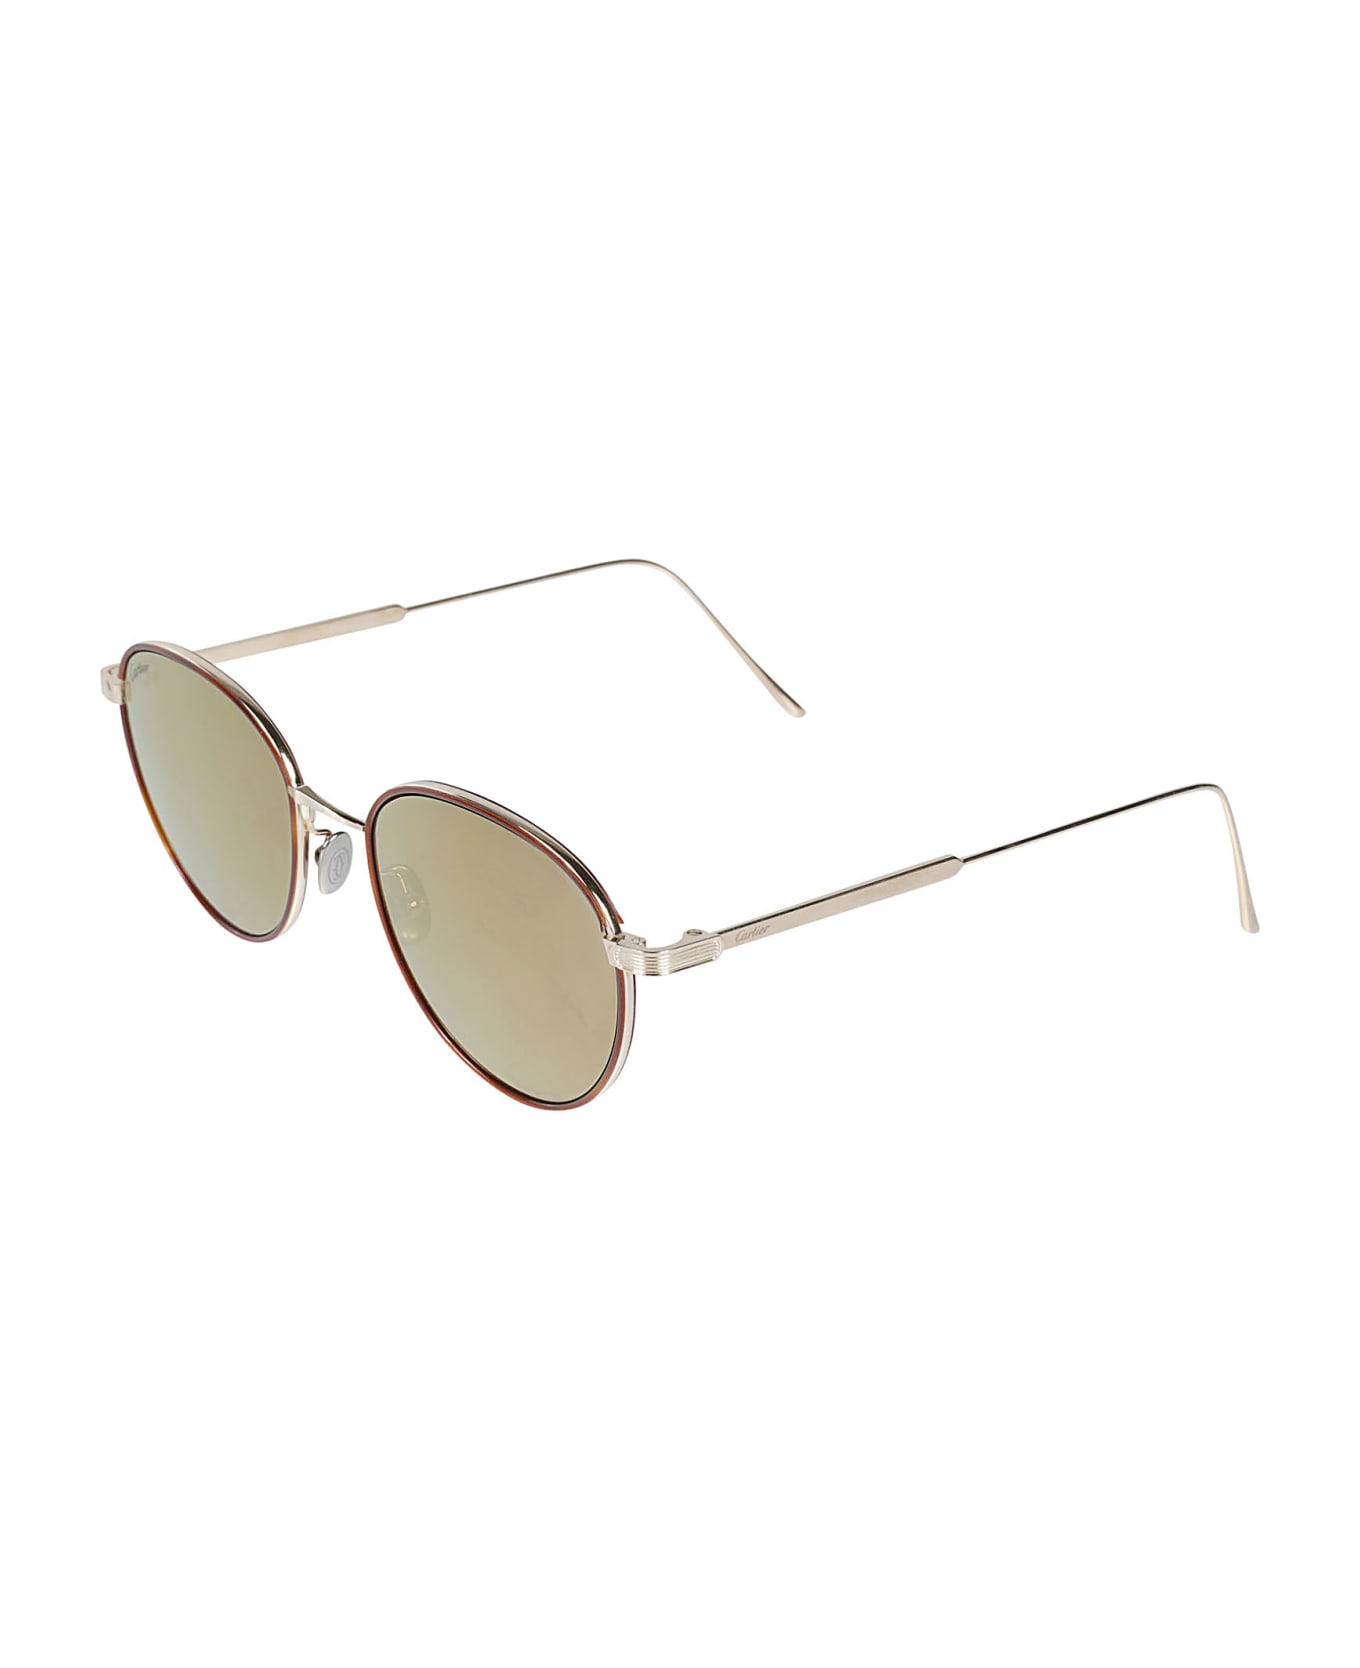 Cartier Eyewear Round Sunglasses - Gold/Bronze サングラス